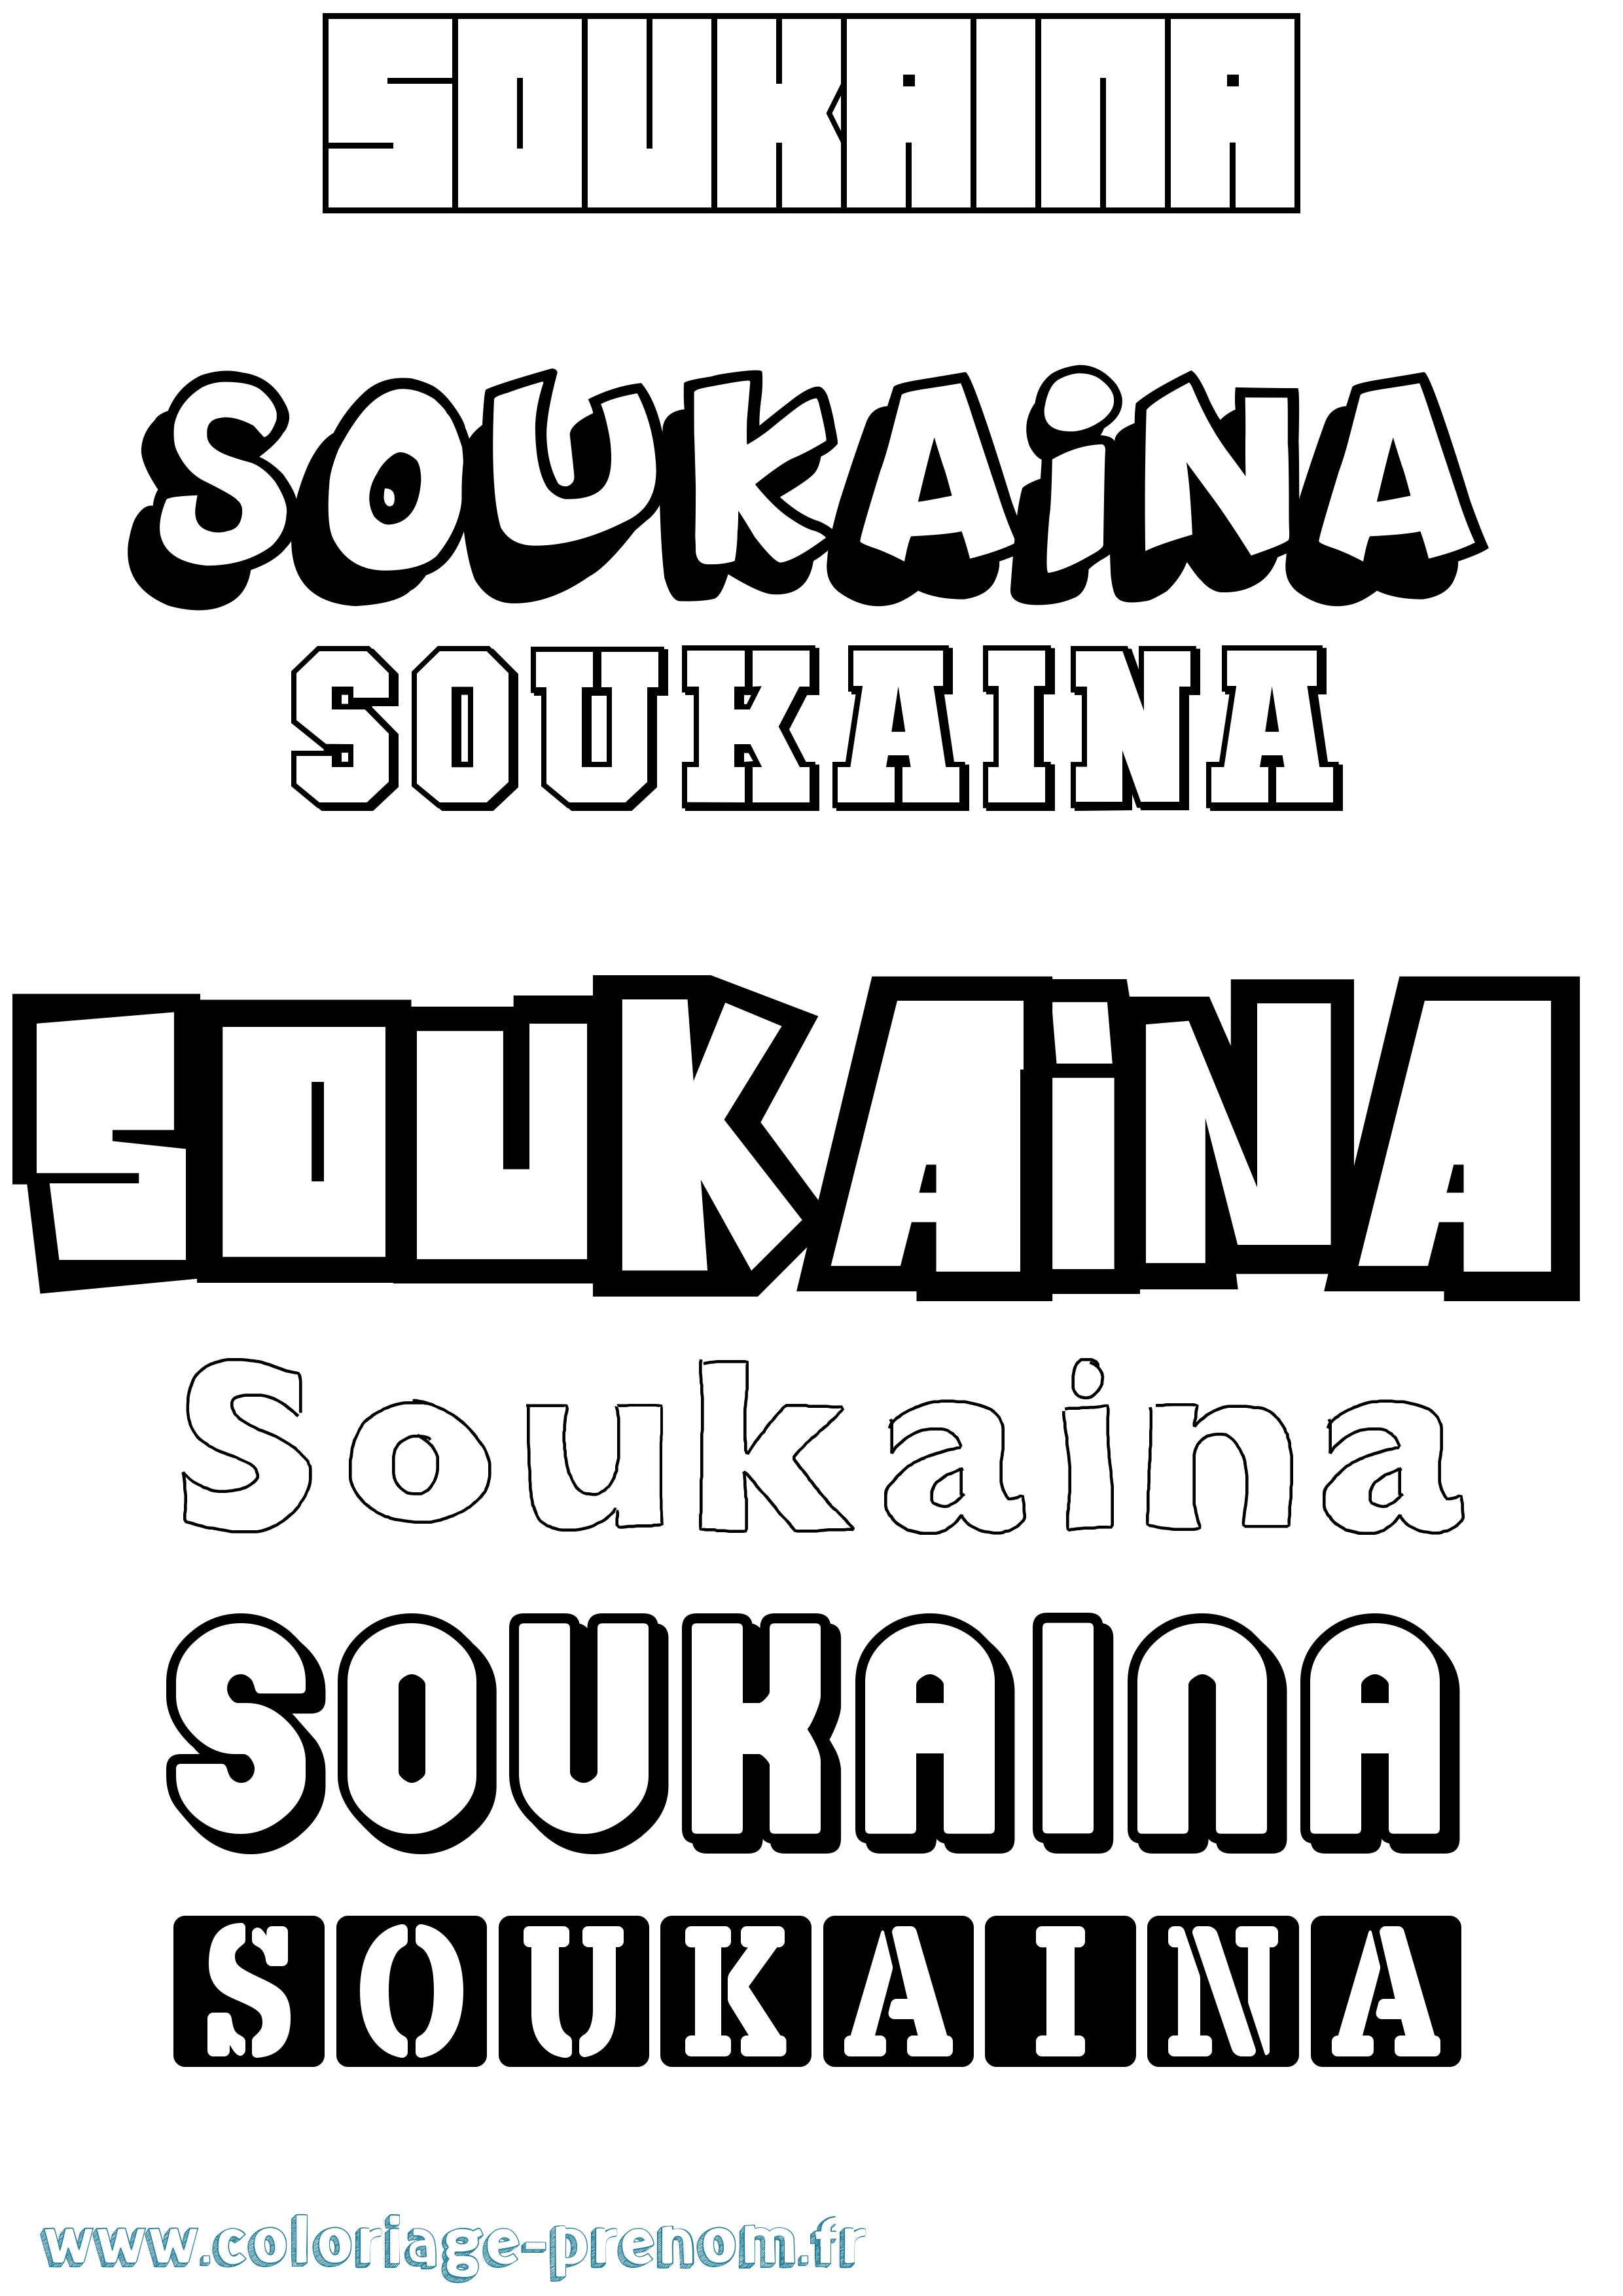 Coloriage prénom Soukaina Simple